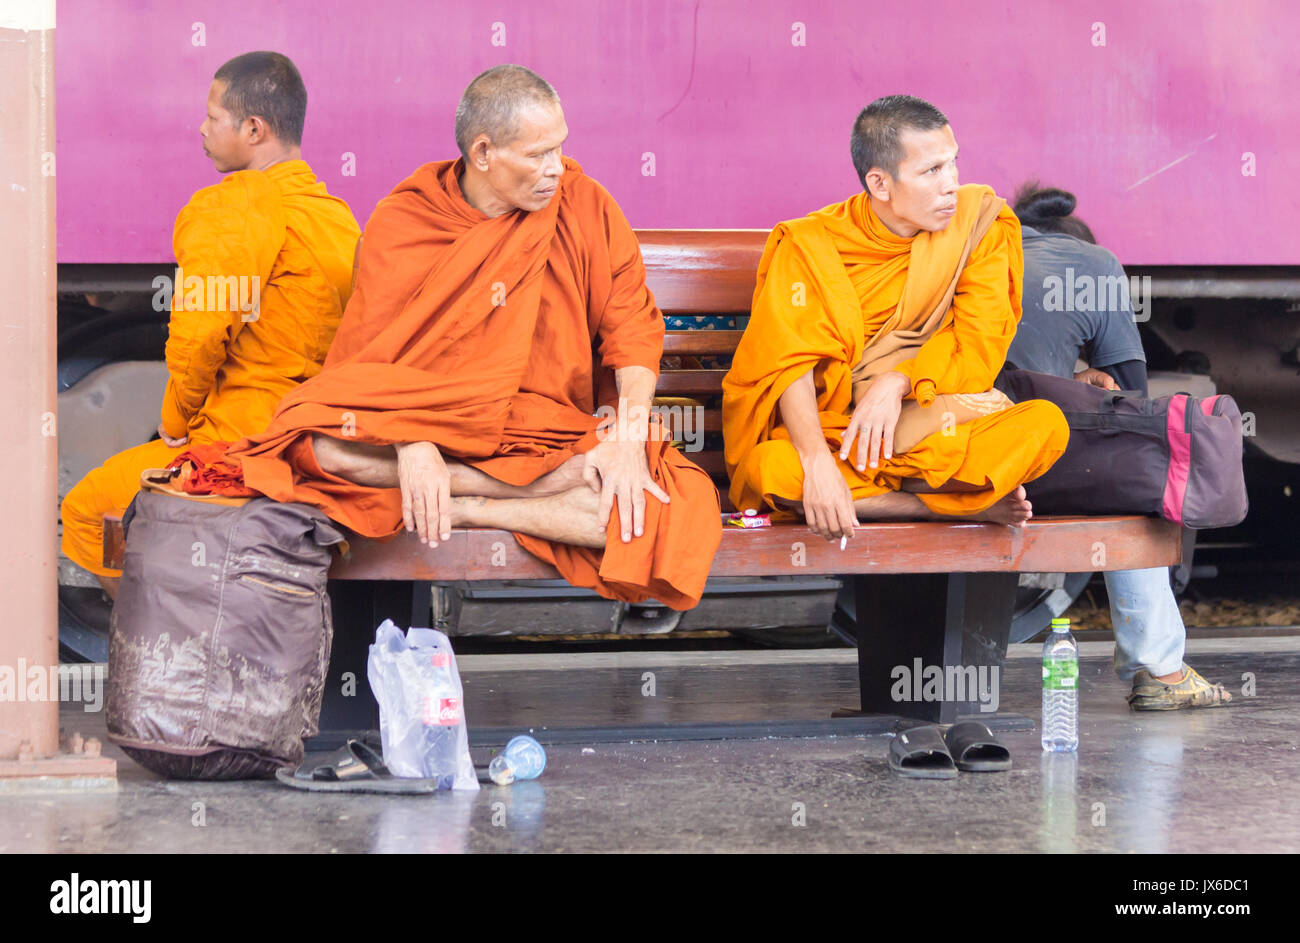 Monks sat on a platform bench waiting for a train, Hua Lamphong railway station, Bangkok, Thailand Stock Photo